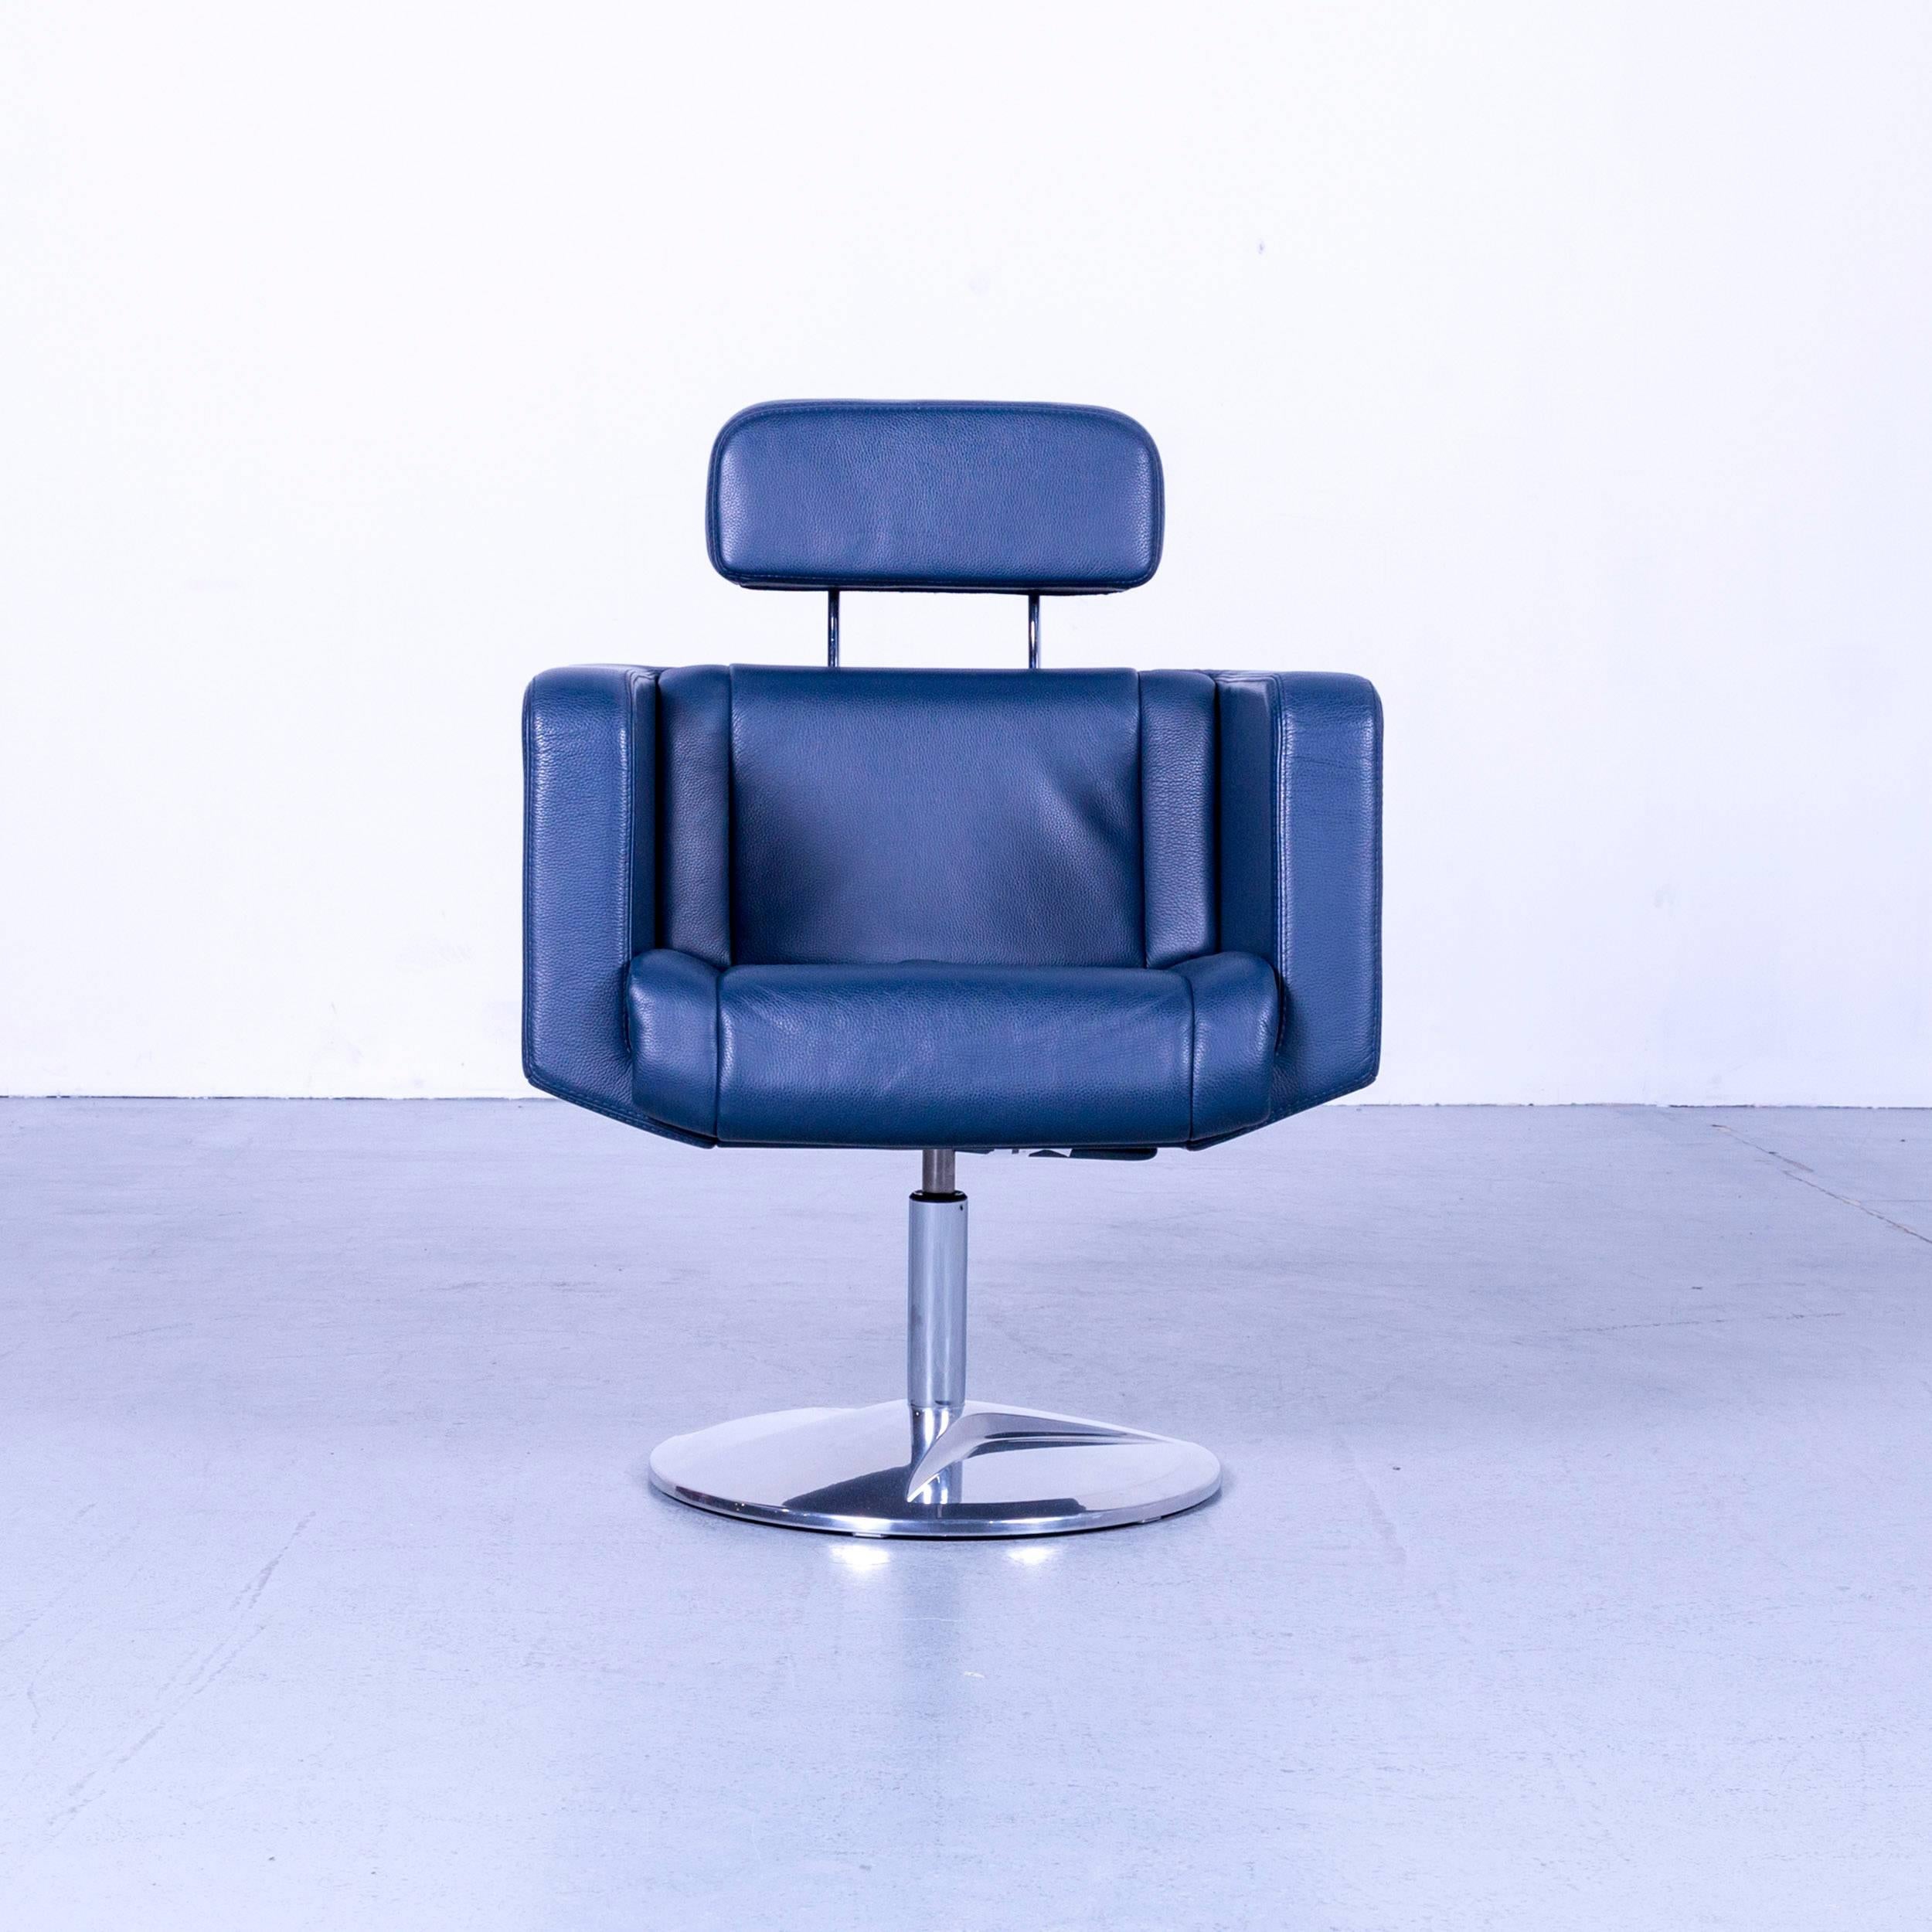 Swiss Stoll Giroflex 21-6091 Designer Armchair Blue Leather One-Seat Modern